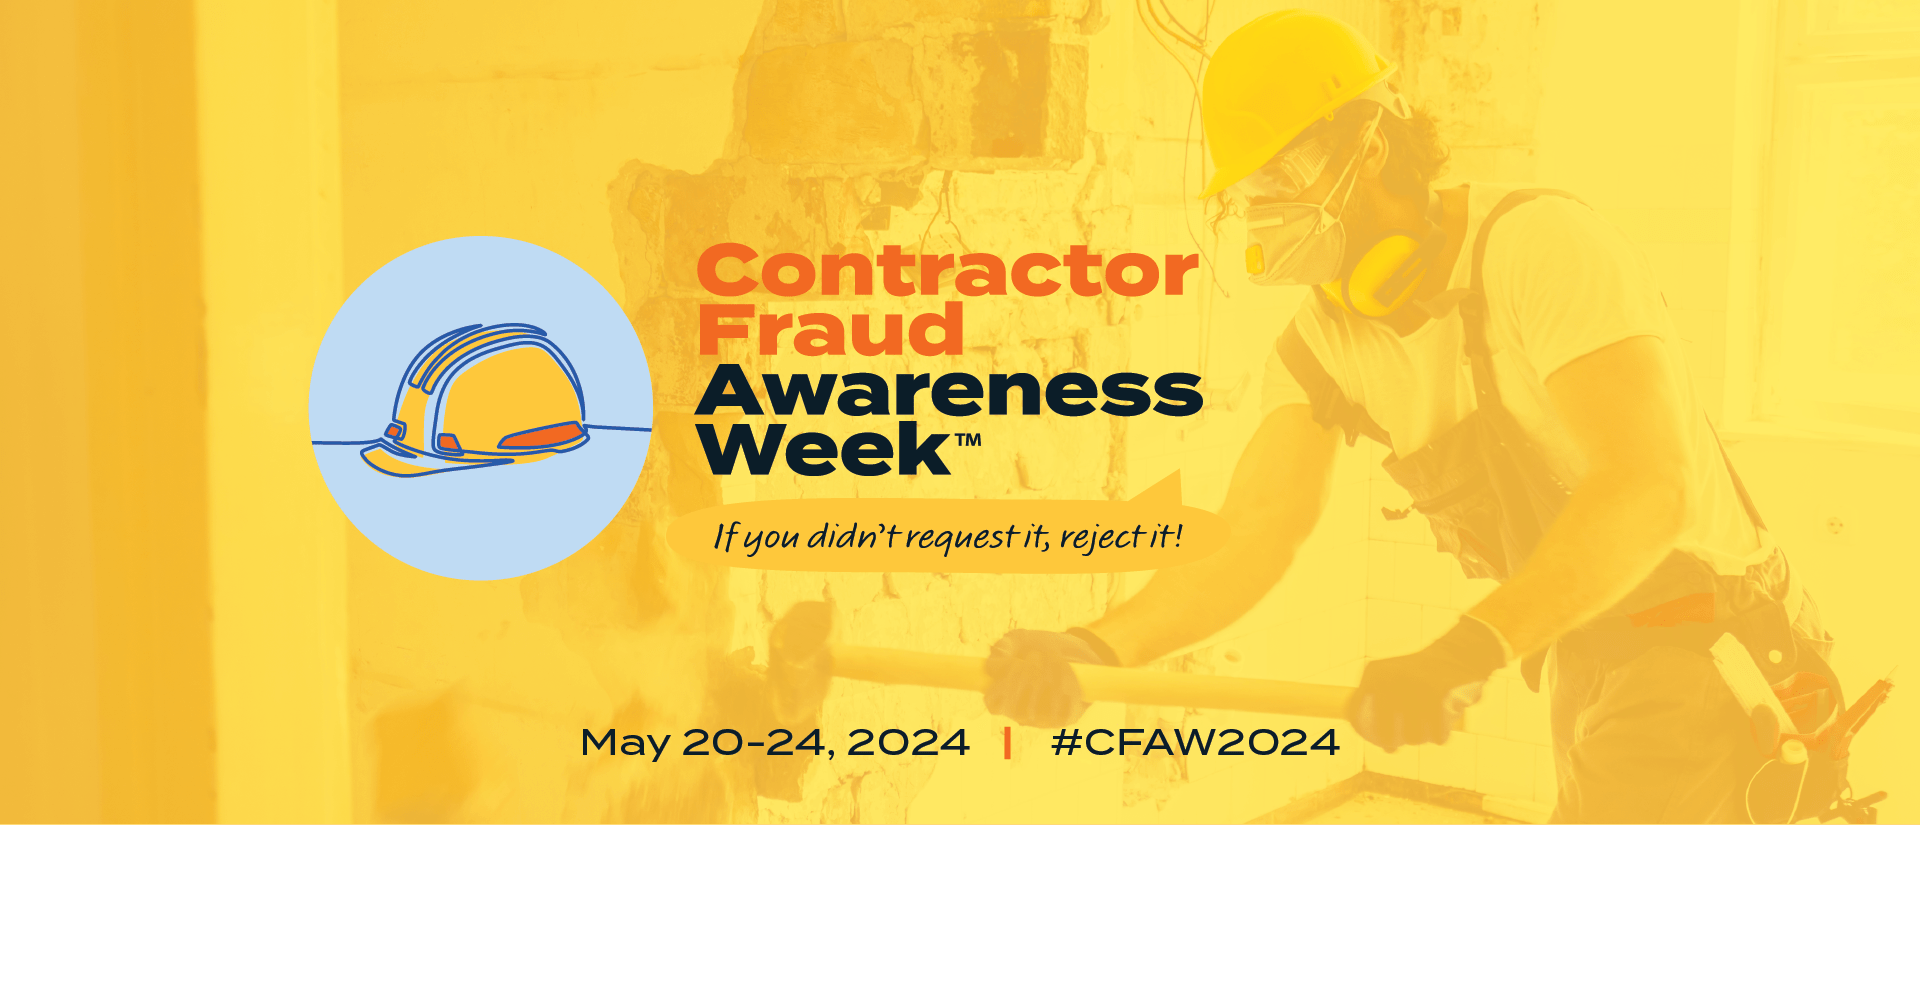 Contractor Fraud Awareness Week May 20 - 24, 2024 #CFAW2024